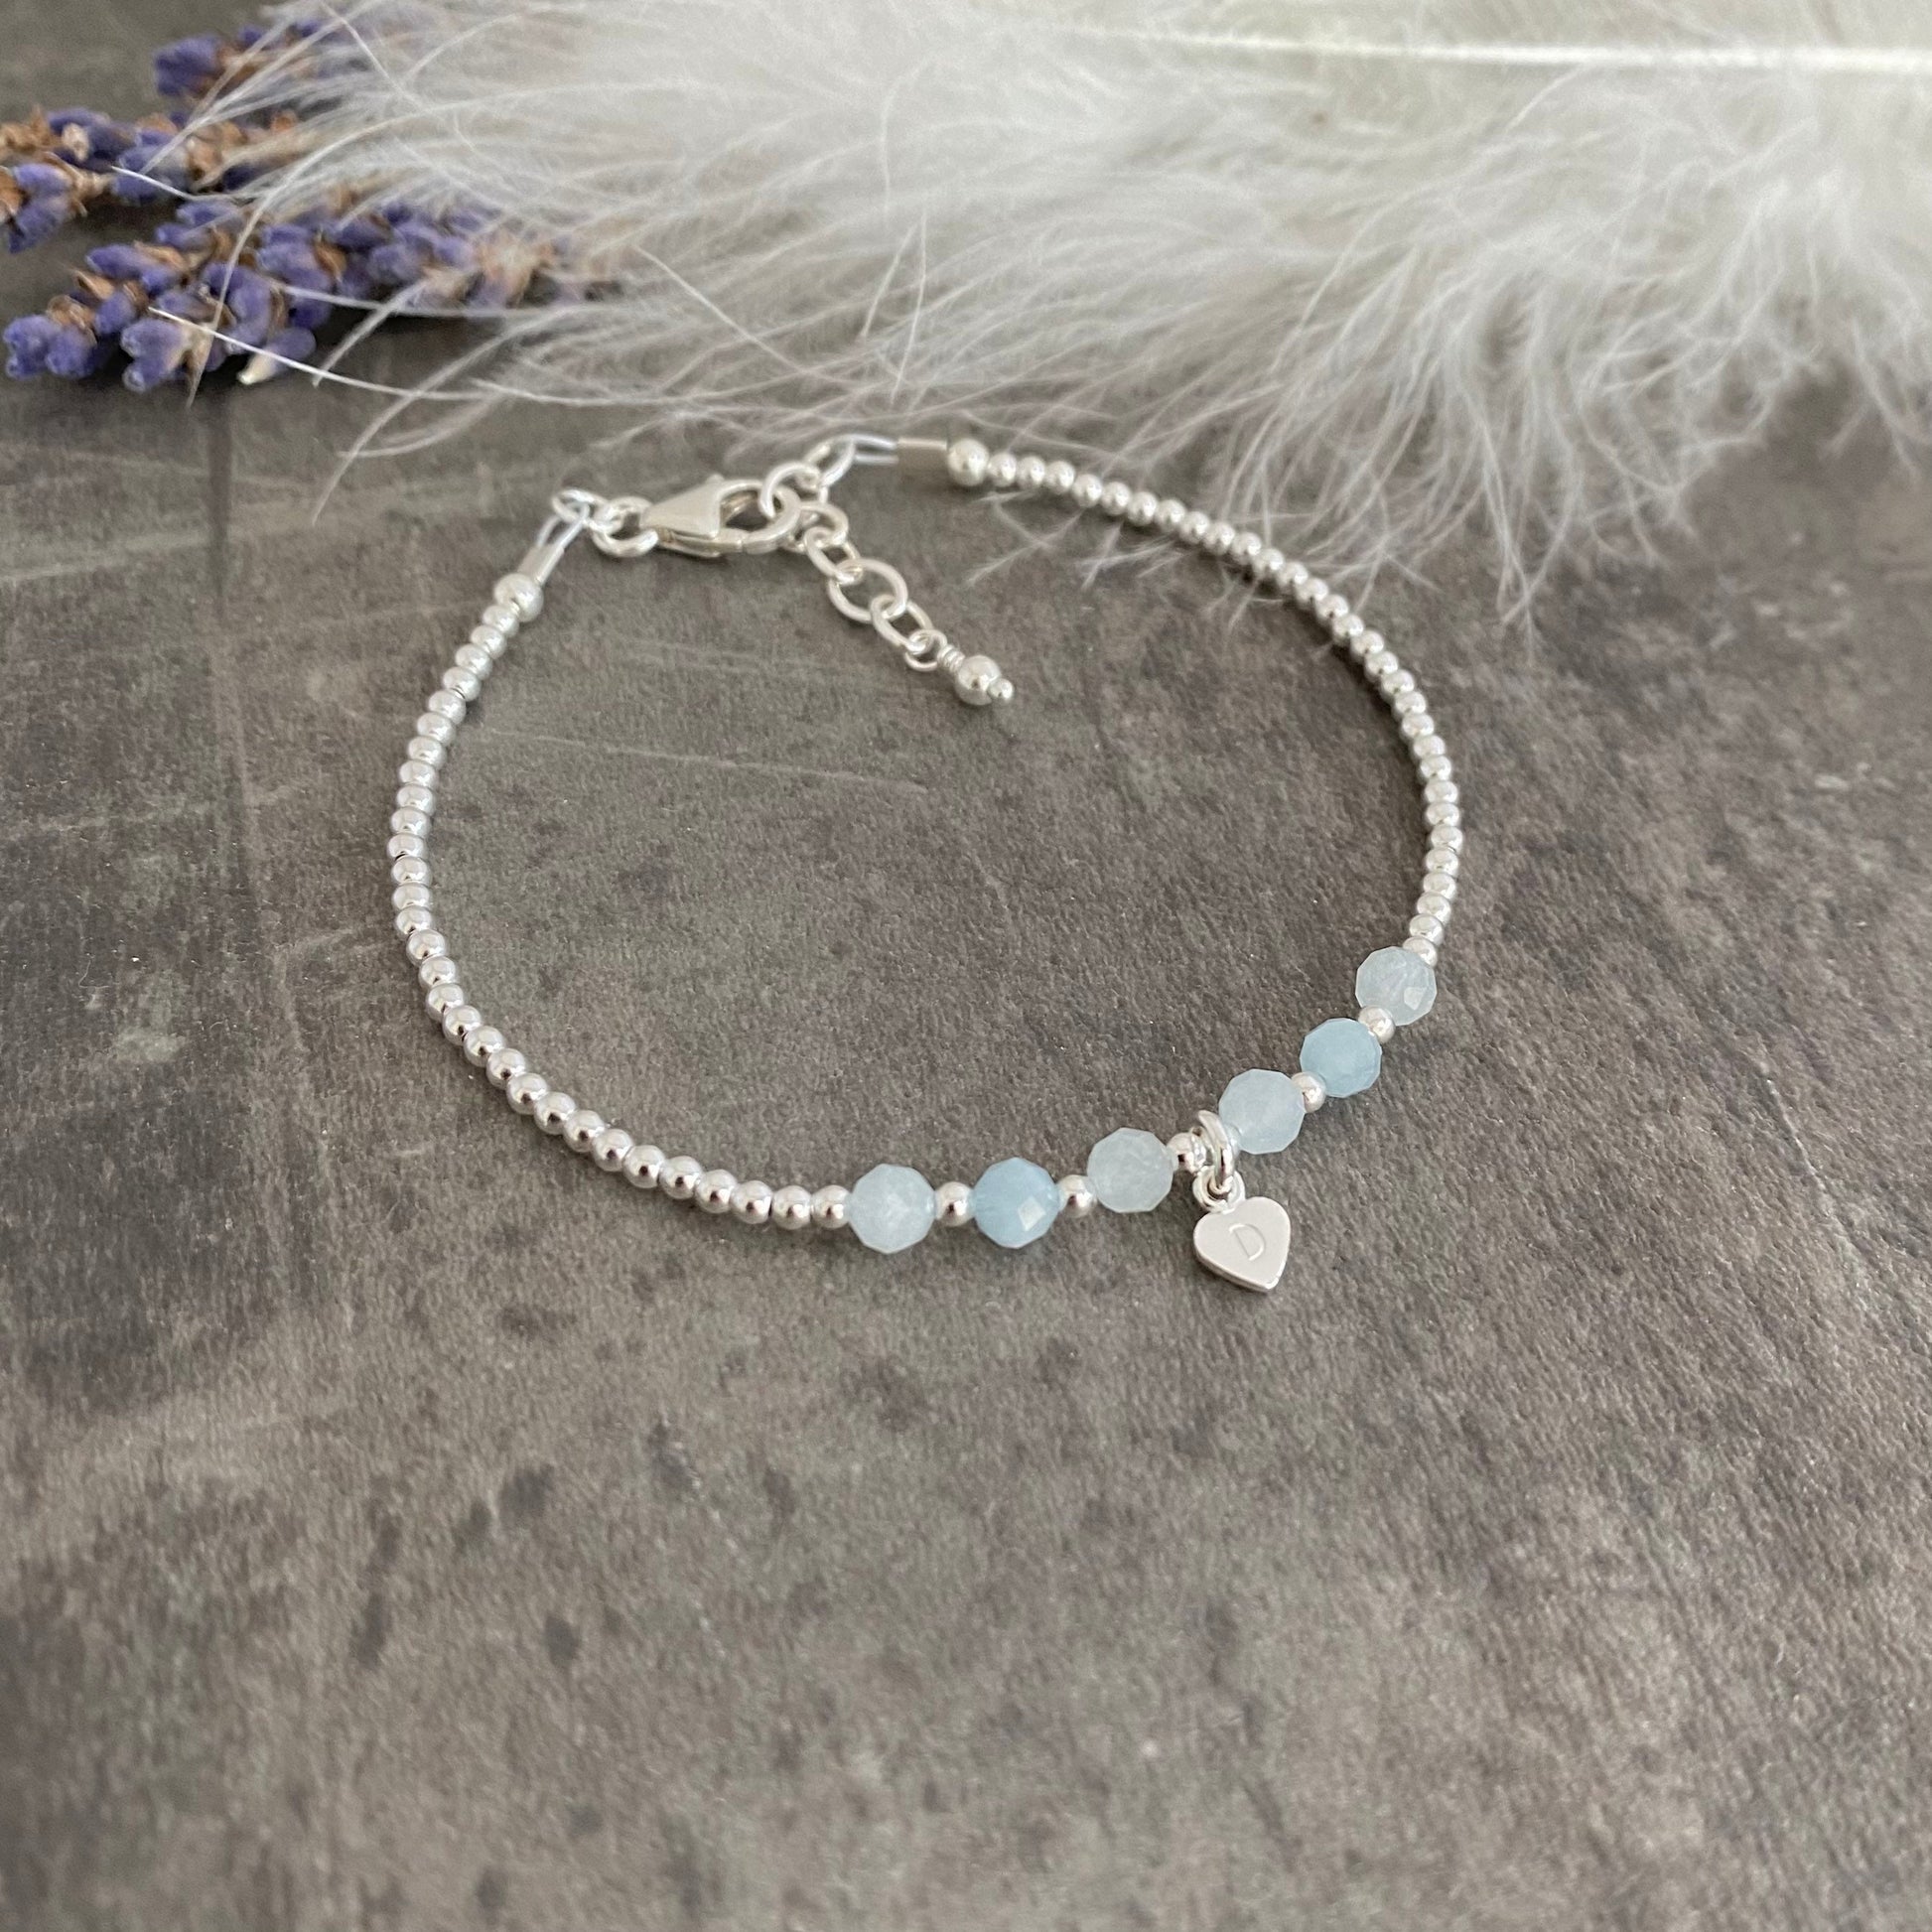 Personalised Aquamarine Bracelet, Dainty March Birthstone Jewellery in Sterling Silver nft